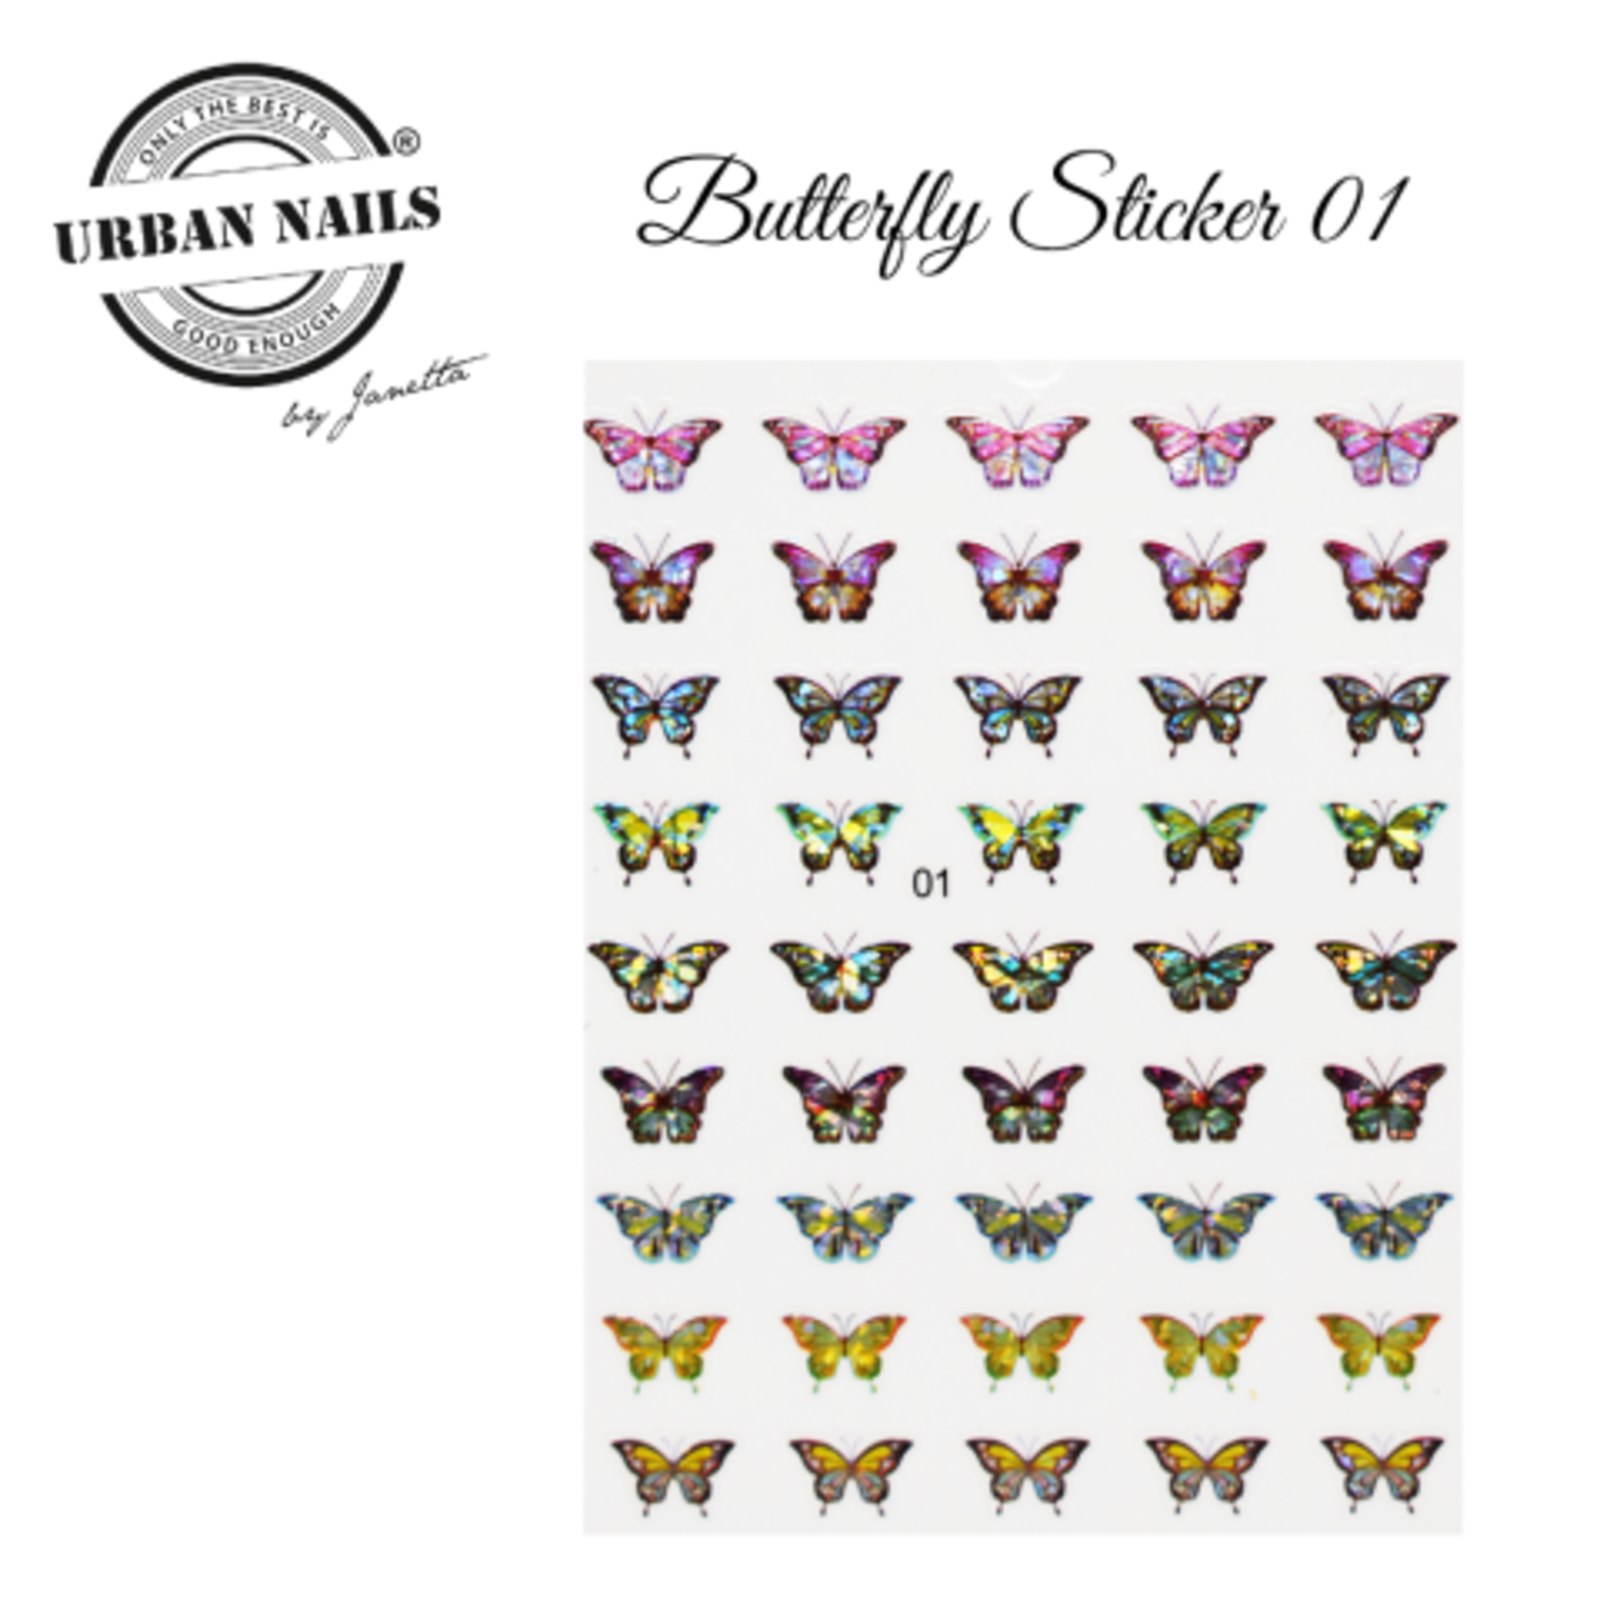 Urban nails Butterfly Sticker 01